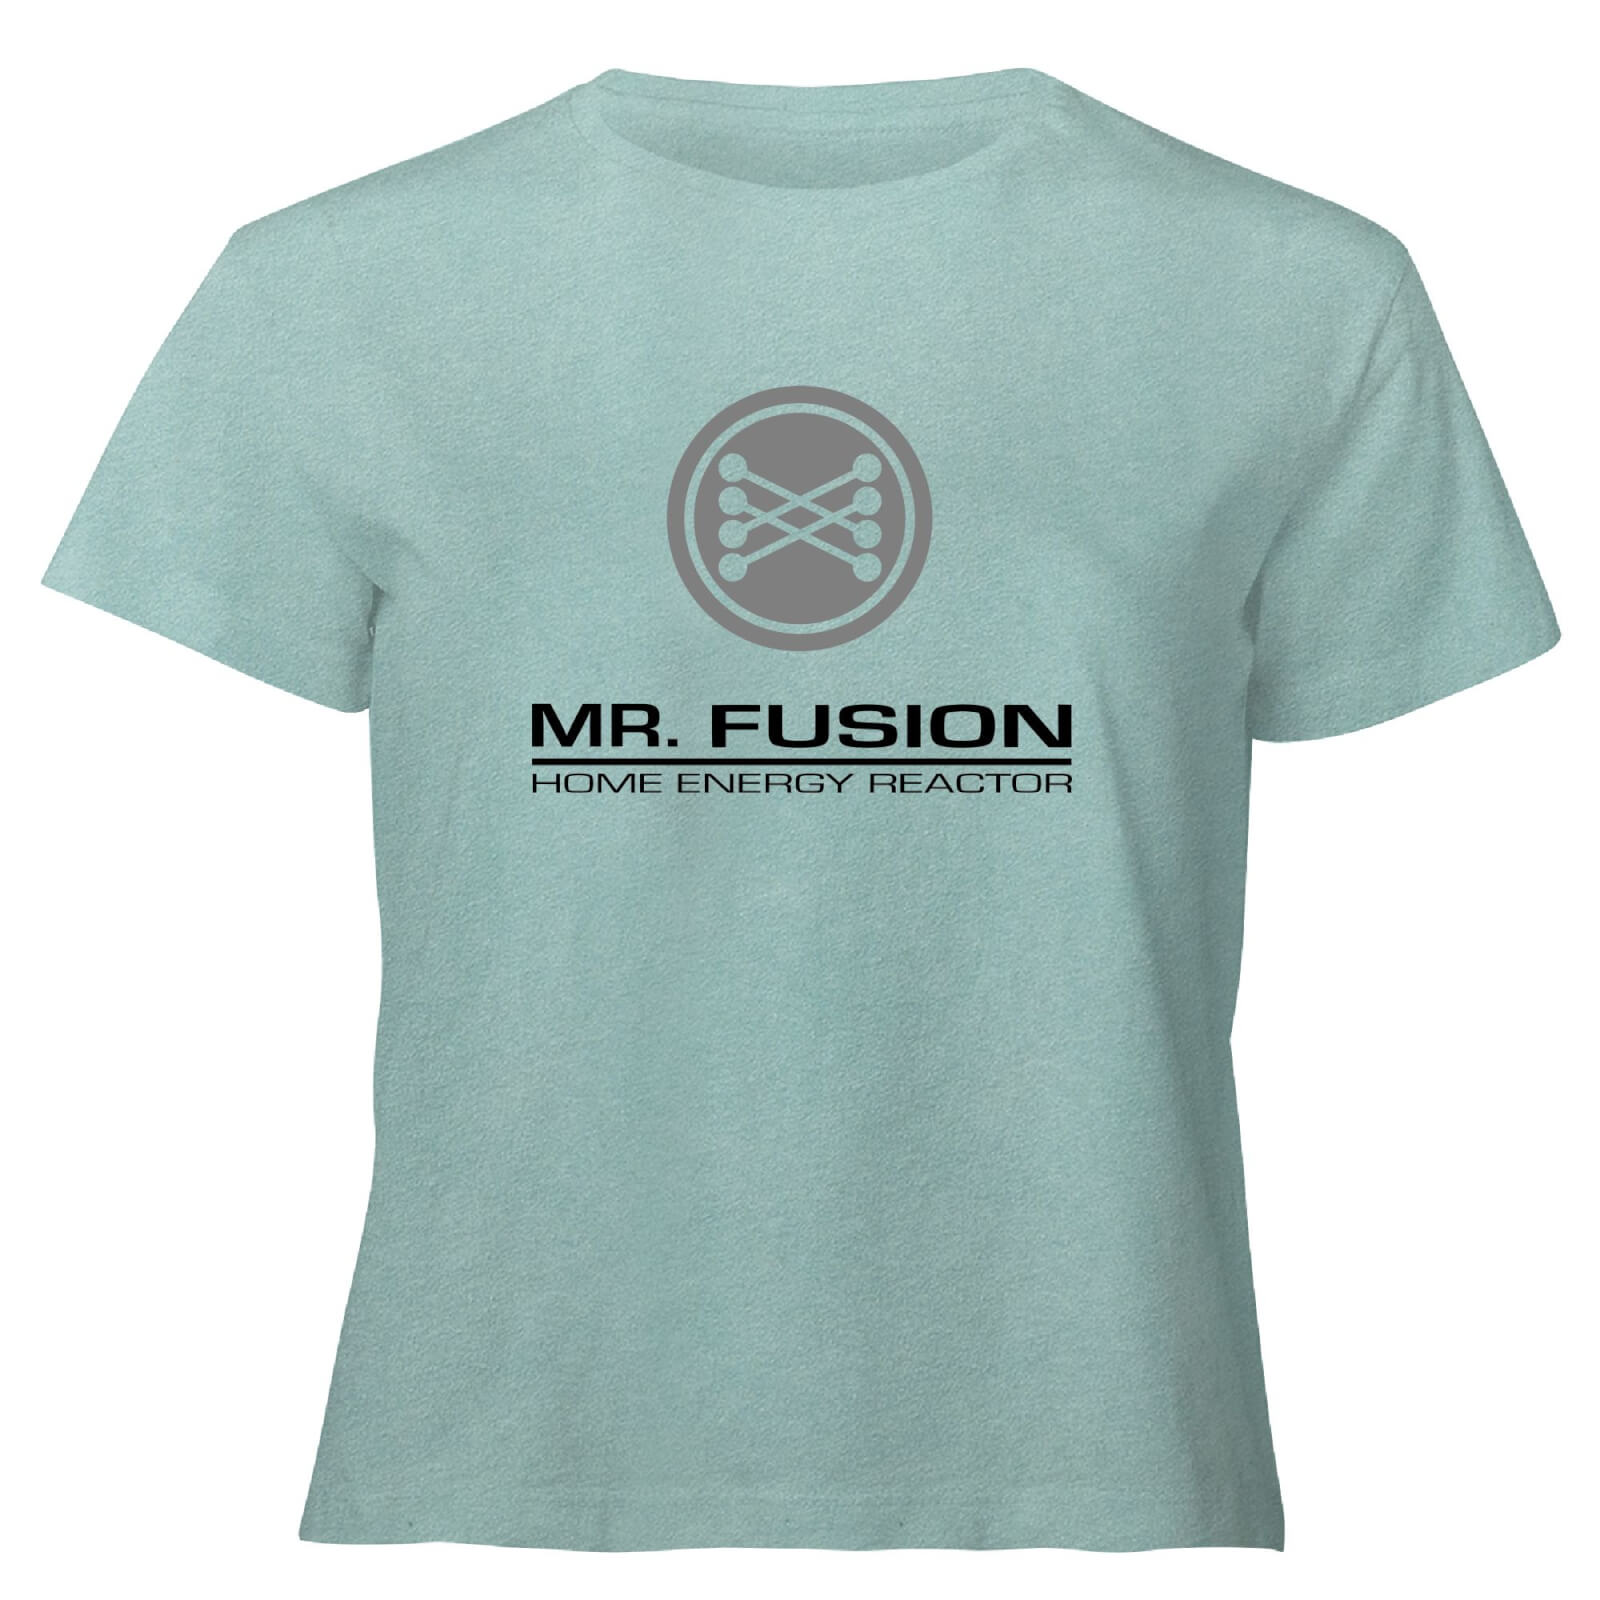 Back To The Future Mr Fusion - Women's Cropped T-Shirt - Mint Acid Wash - XS - Mint Acid Wash